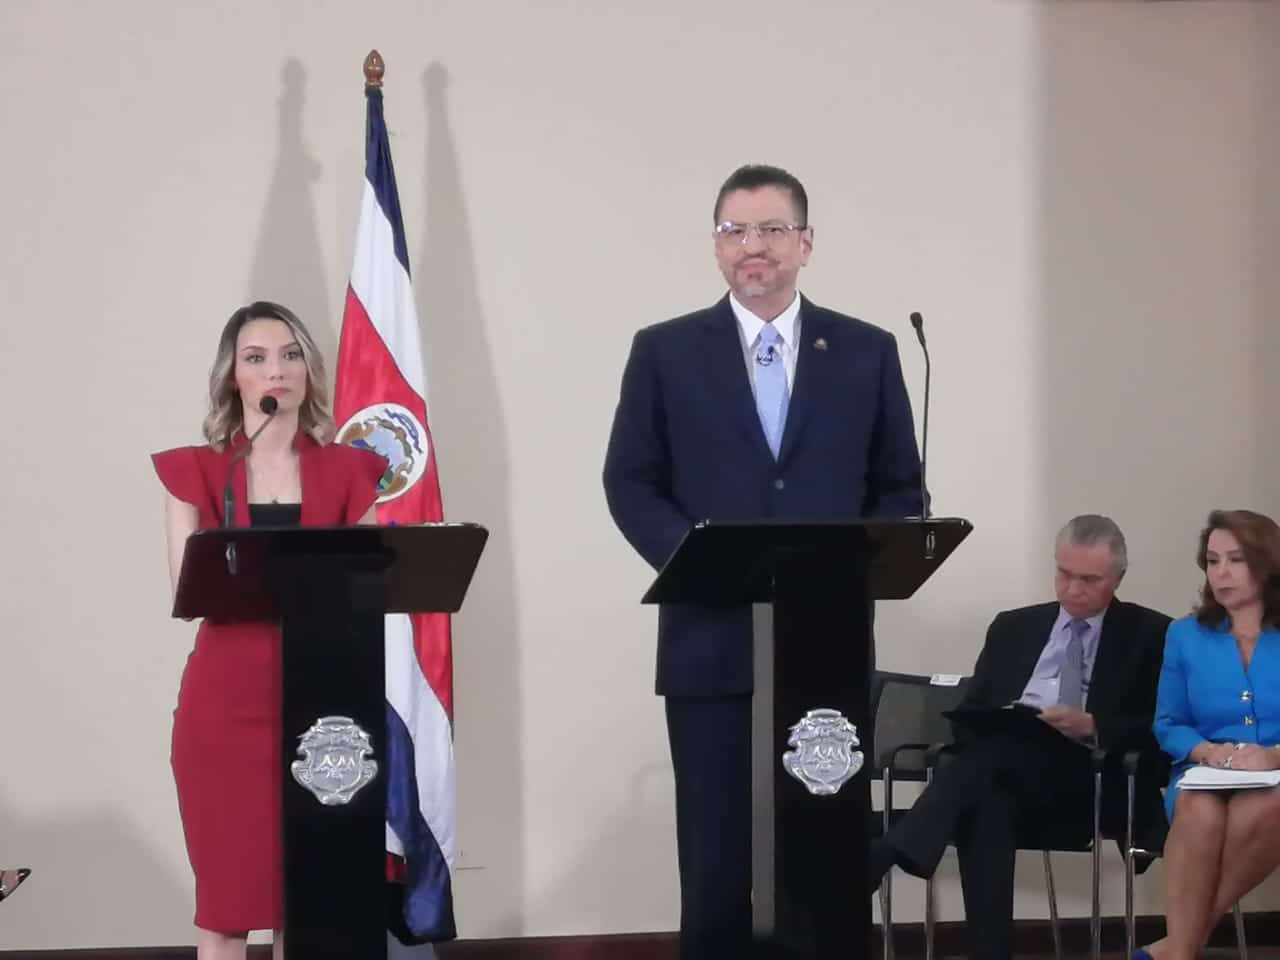 Chaves sigue sin tomar posición sobre candidatura nicaragüense al SICA, este mes será reunión decisiva